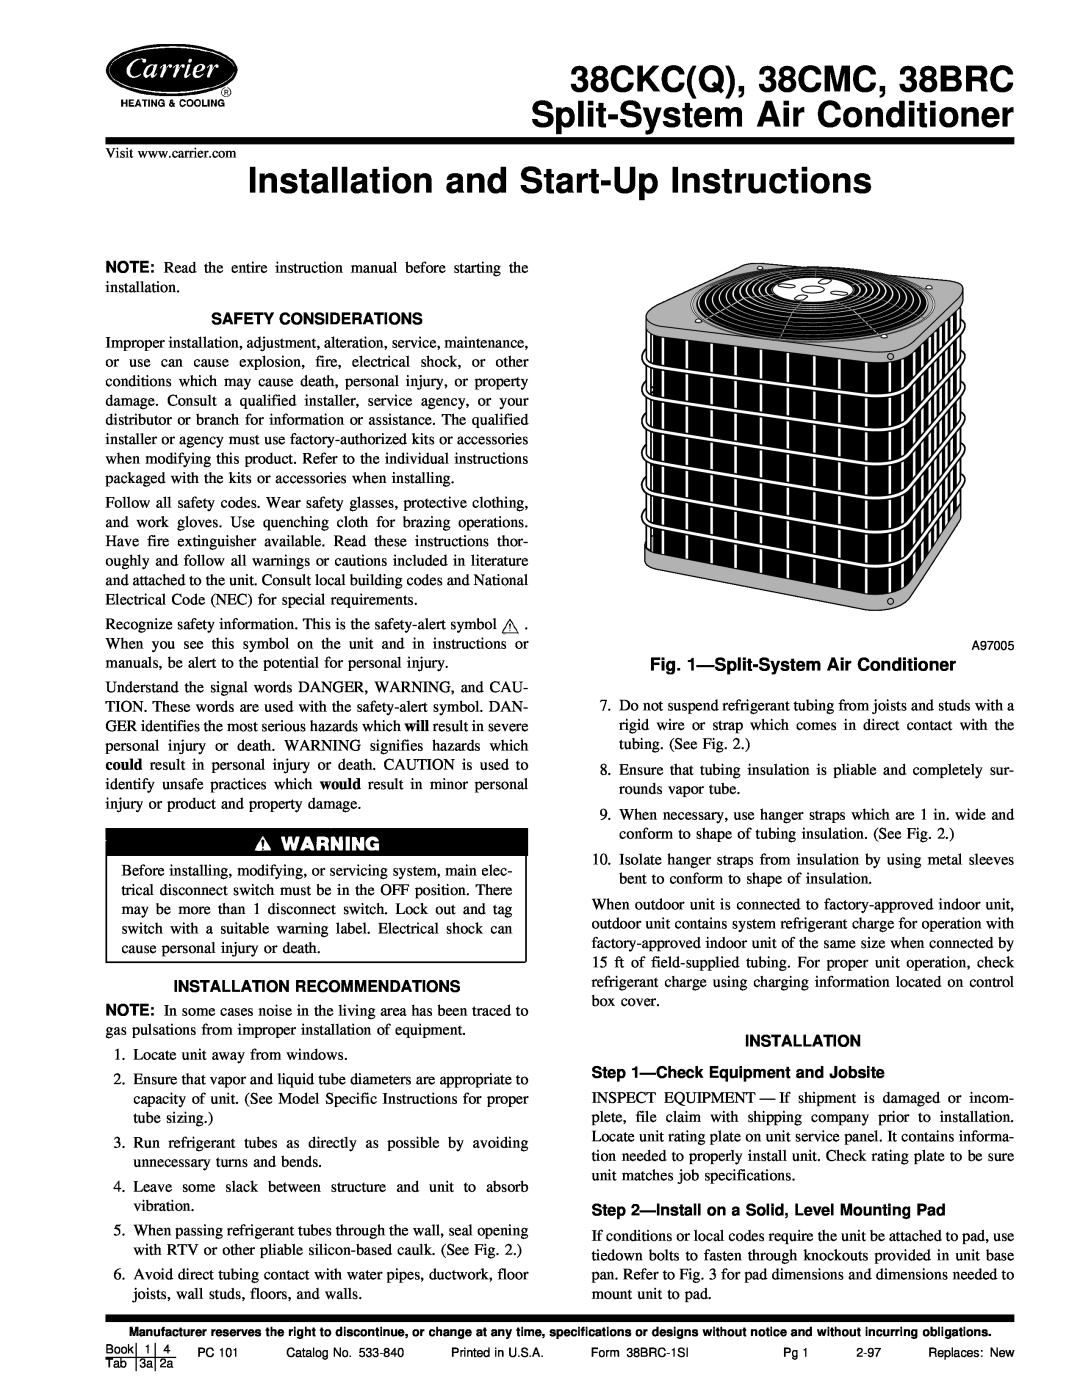 Carrier 38CKC(Q) instruction manual ÐSplit-SystemAir Conditioner, Installation and Start-UpInstructions 